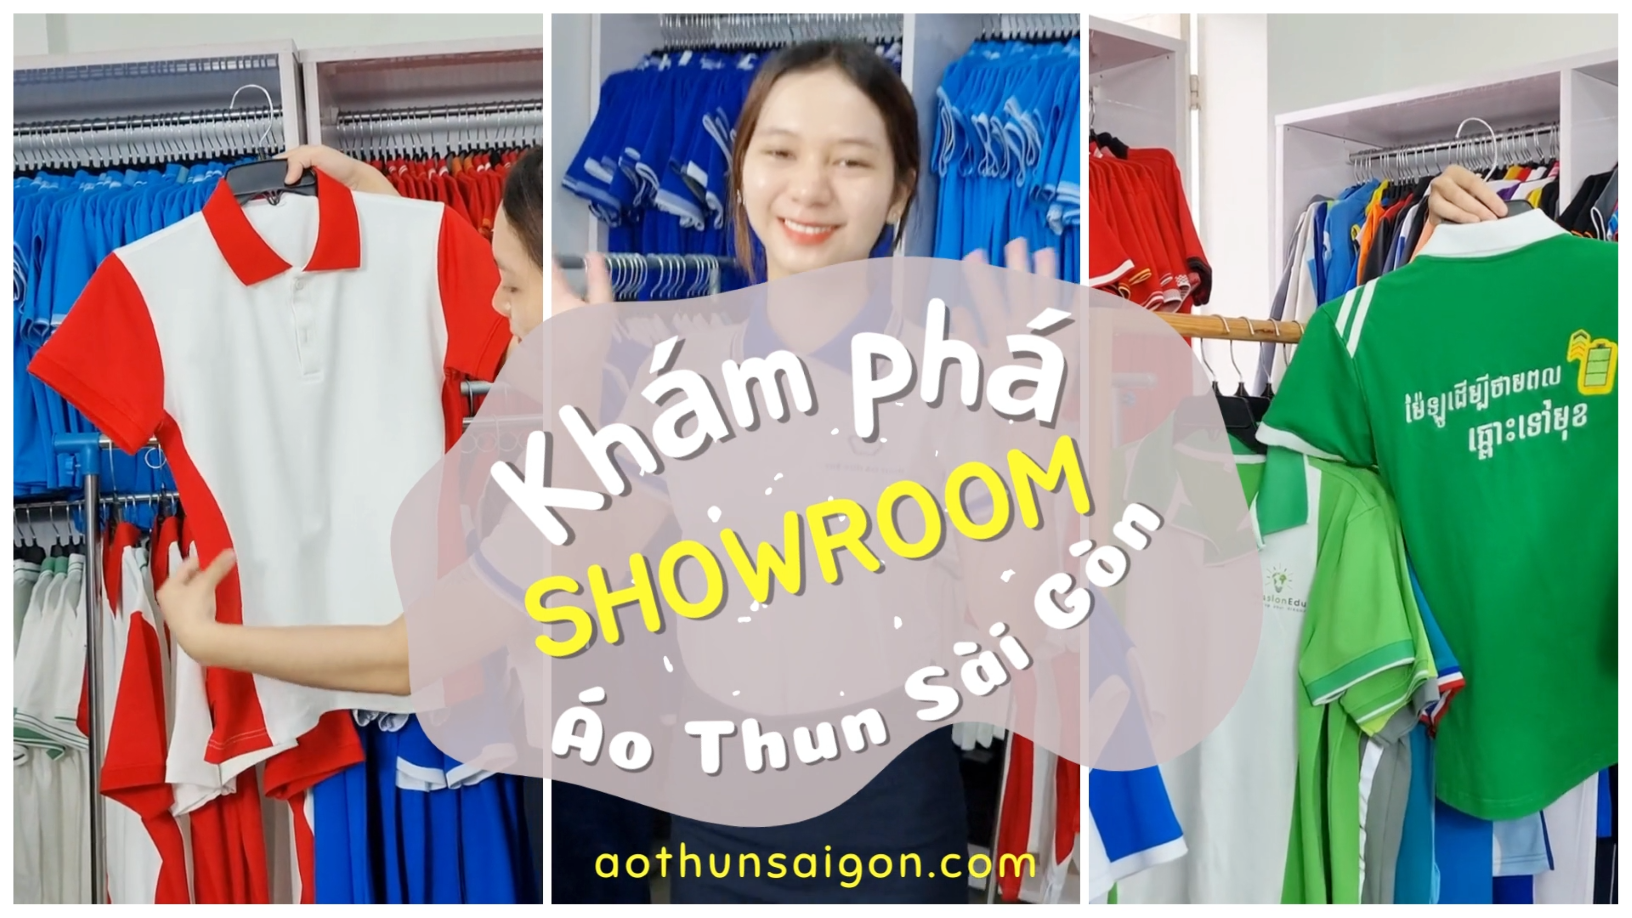 kham pha showroom tasg 1.7 - Video Gallery